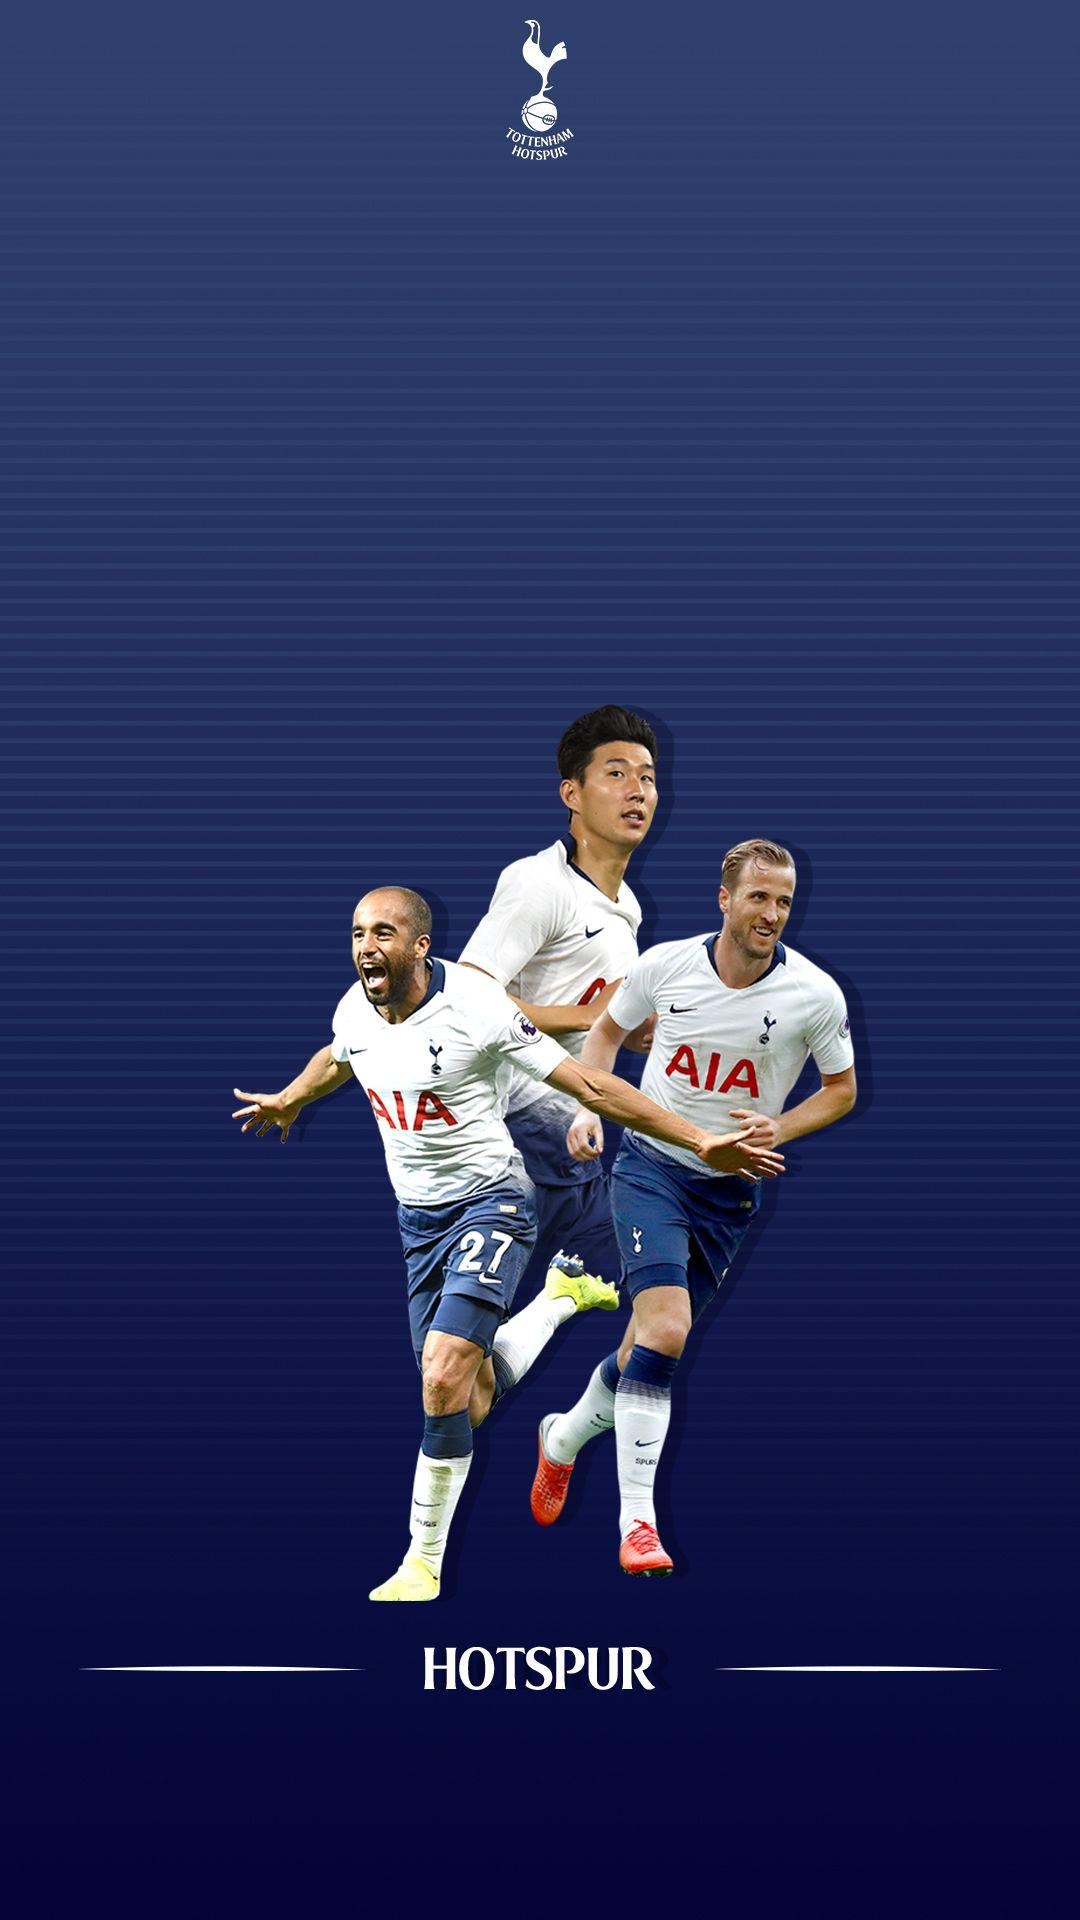 Tottenham Hotspur FC: A world-famous professional football club based in North London. 1080x1920 Full HD Wallpaper.